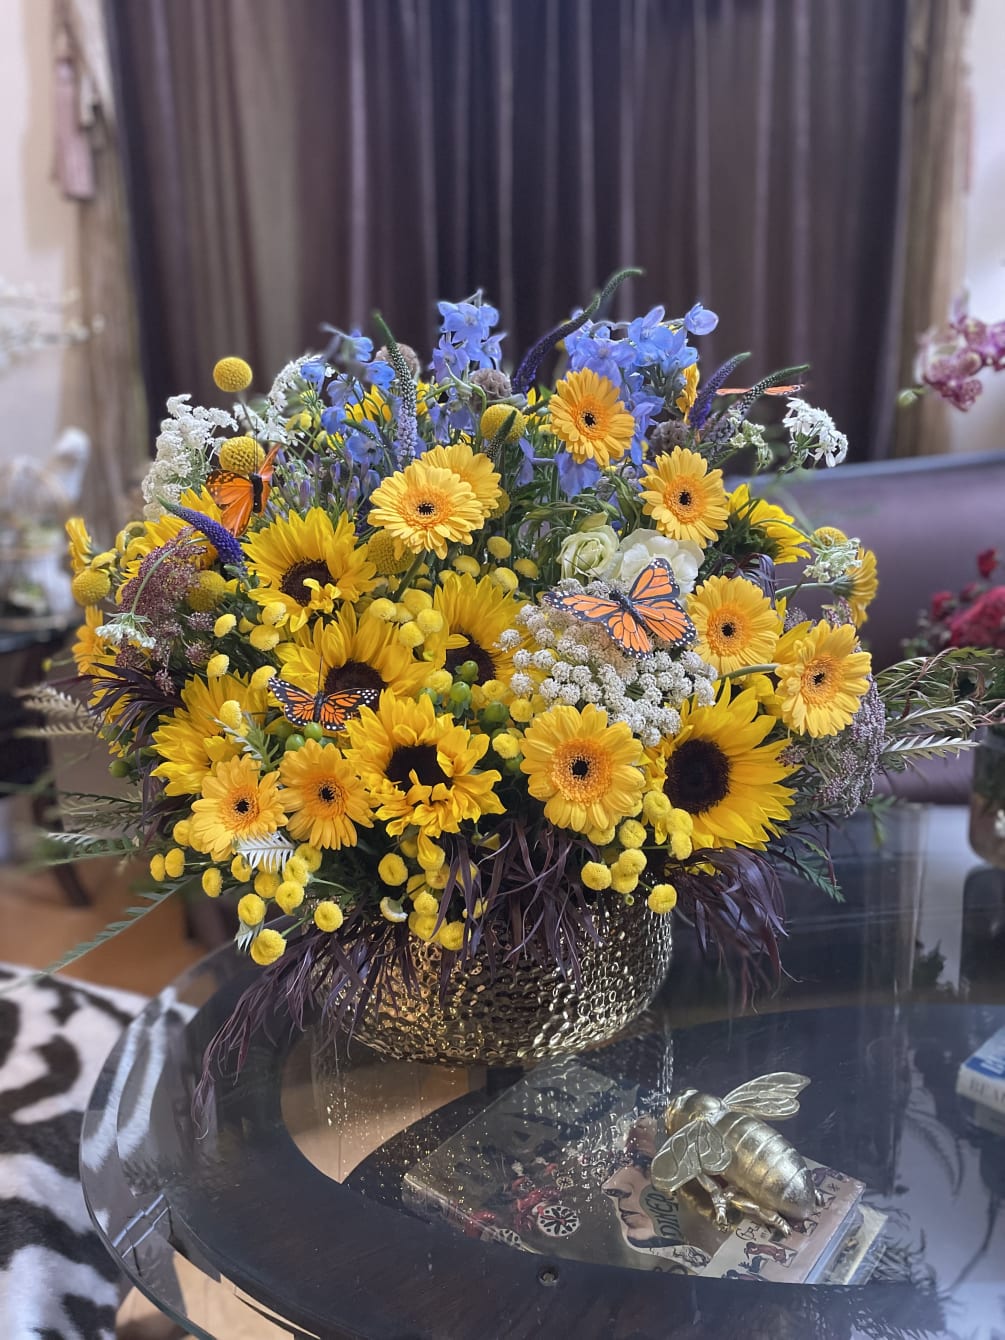 This magnificent arrangement combines vibrant sunflowers, delicate daisies, and elegant delphiniums. The